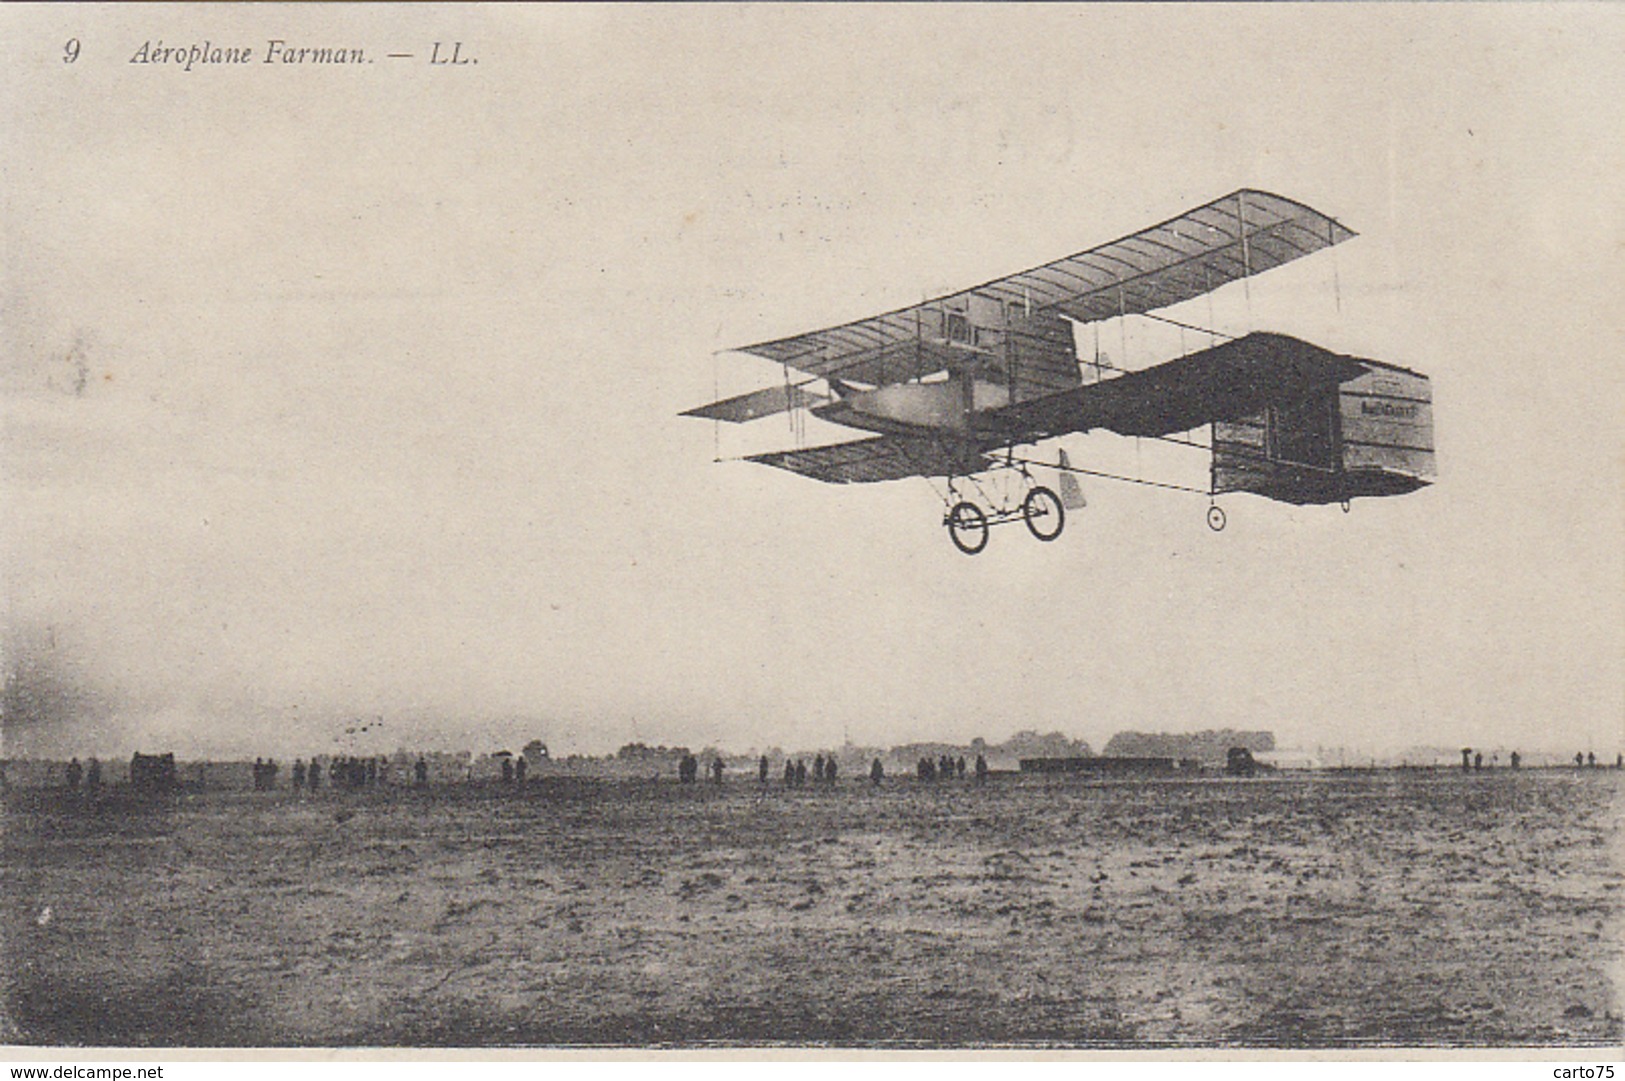 Aviation - Avion Biplan Farmann - ....-1914: Précurseurs